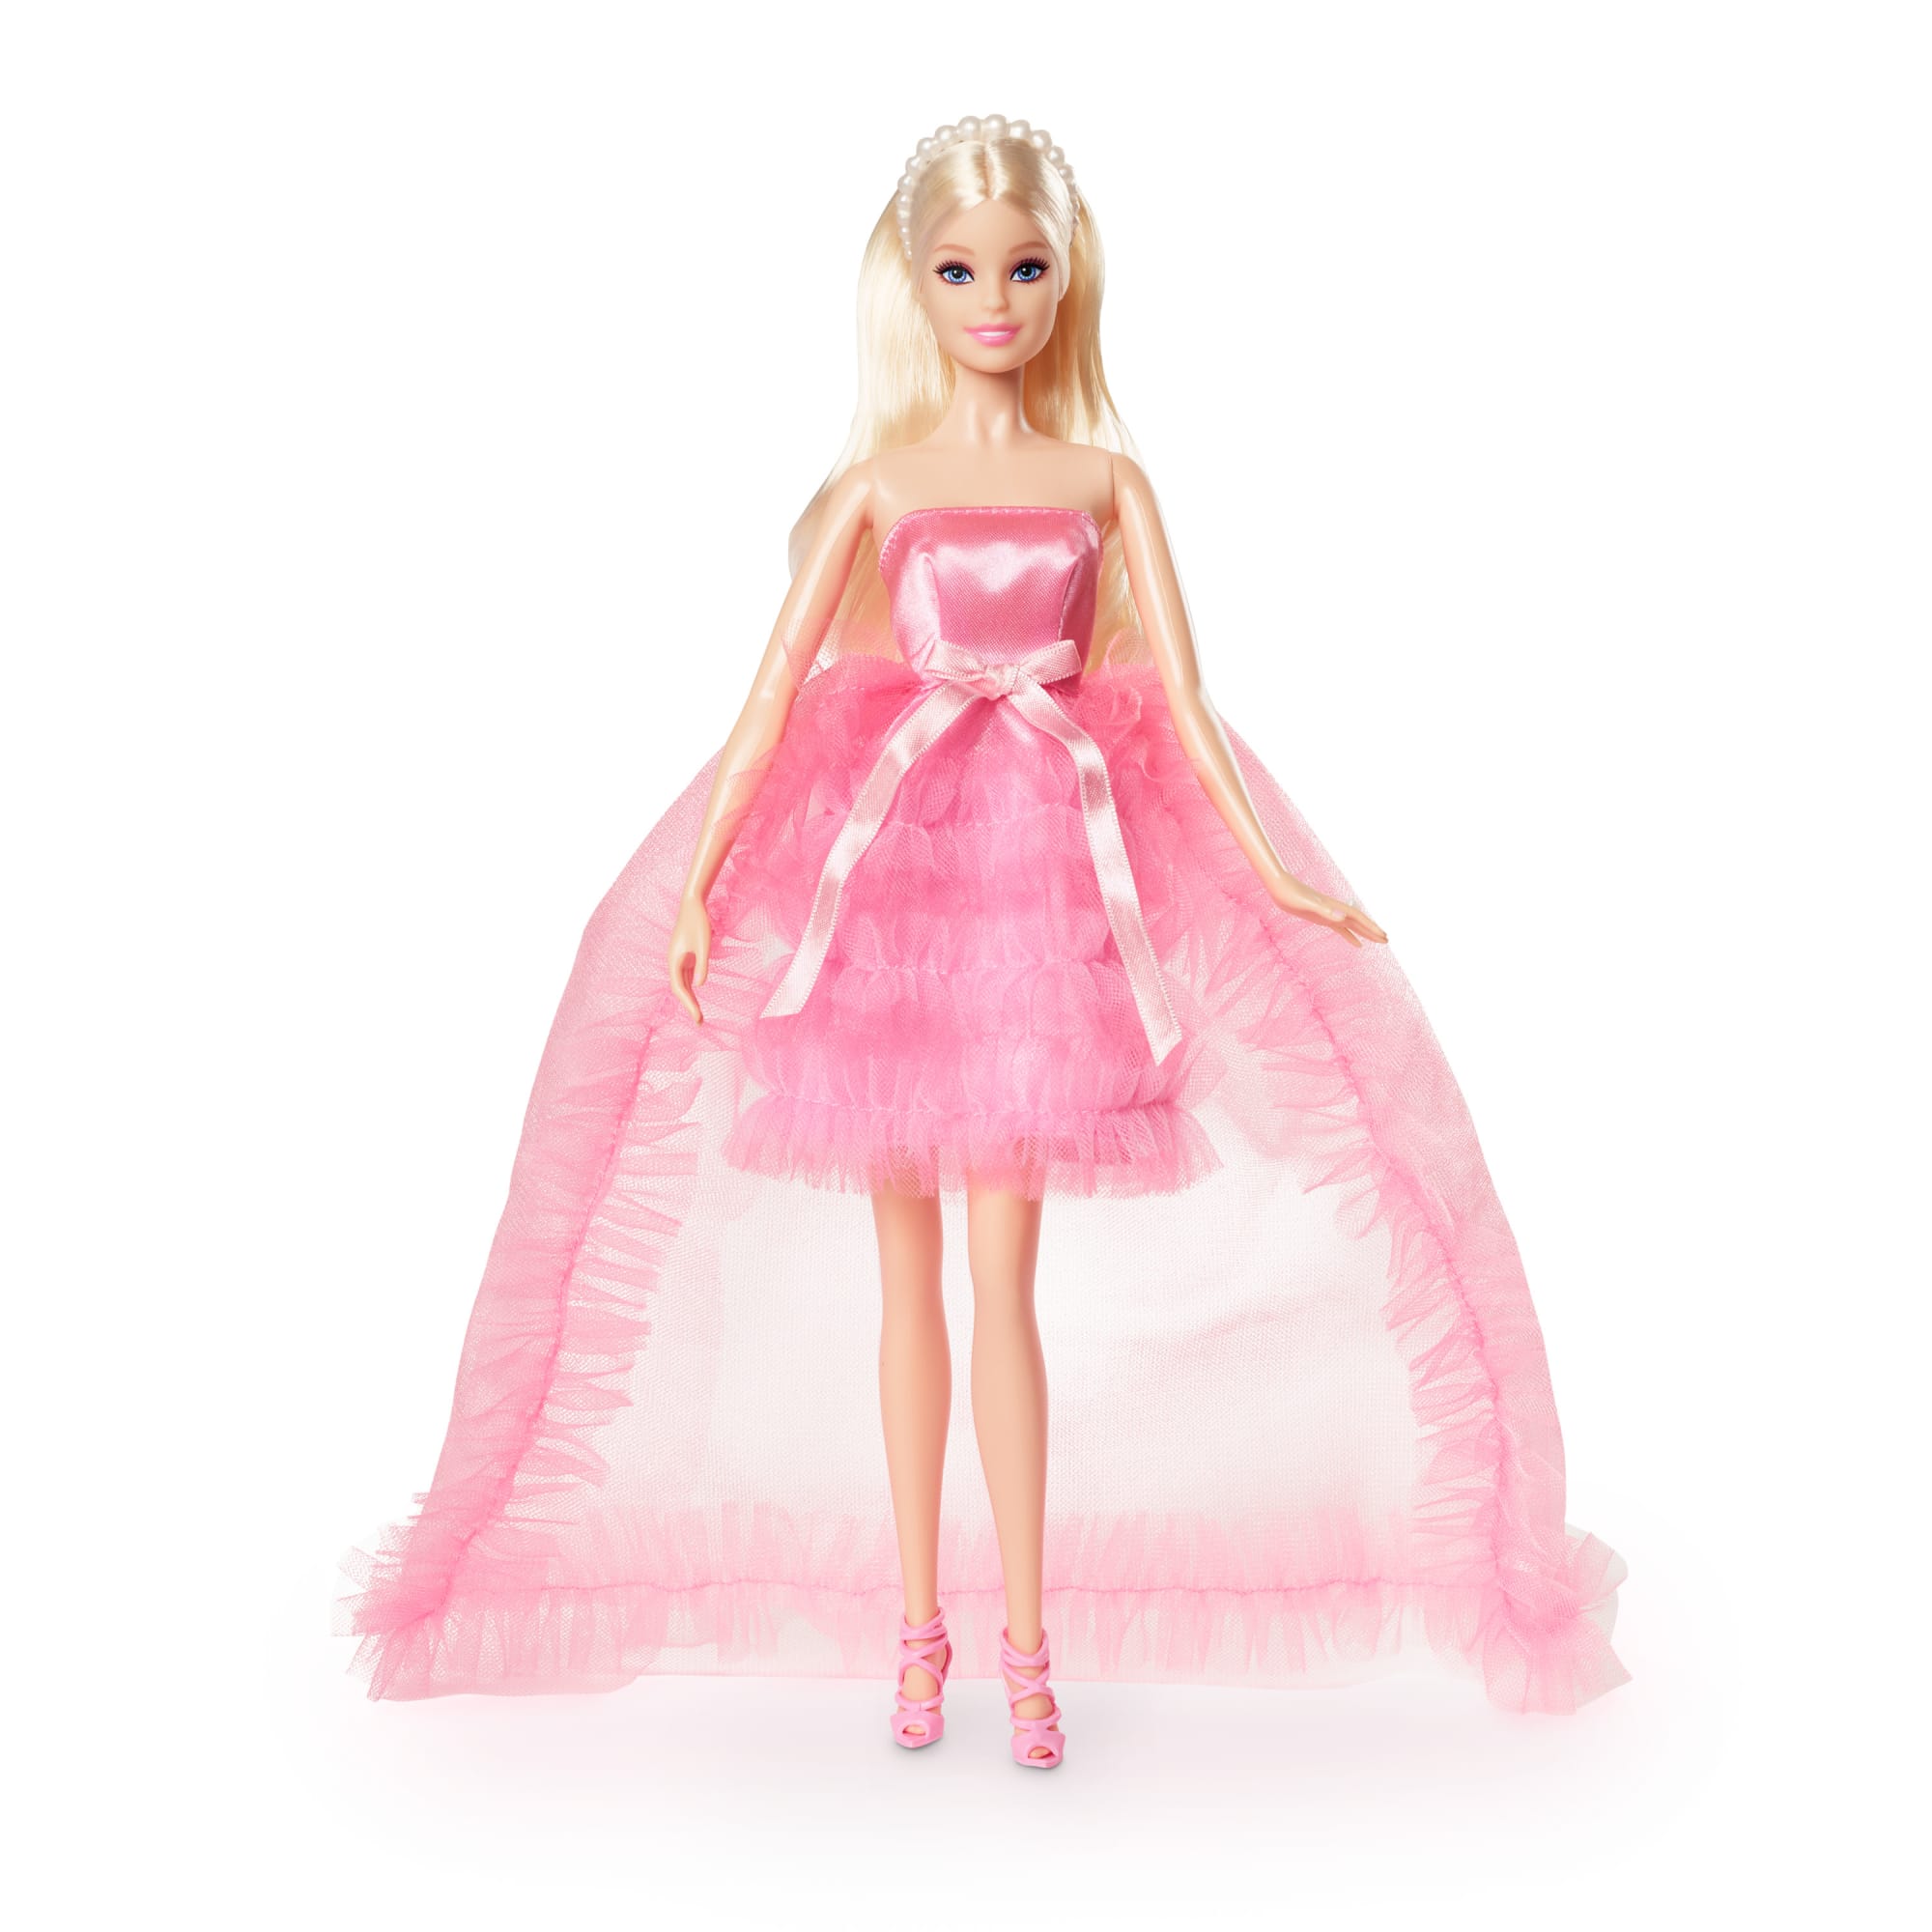 Barbie birthday decorations -  España